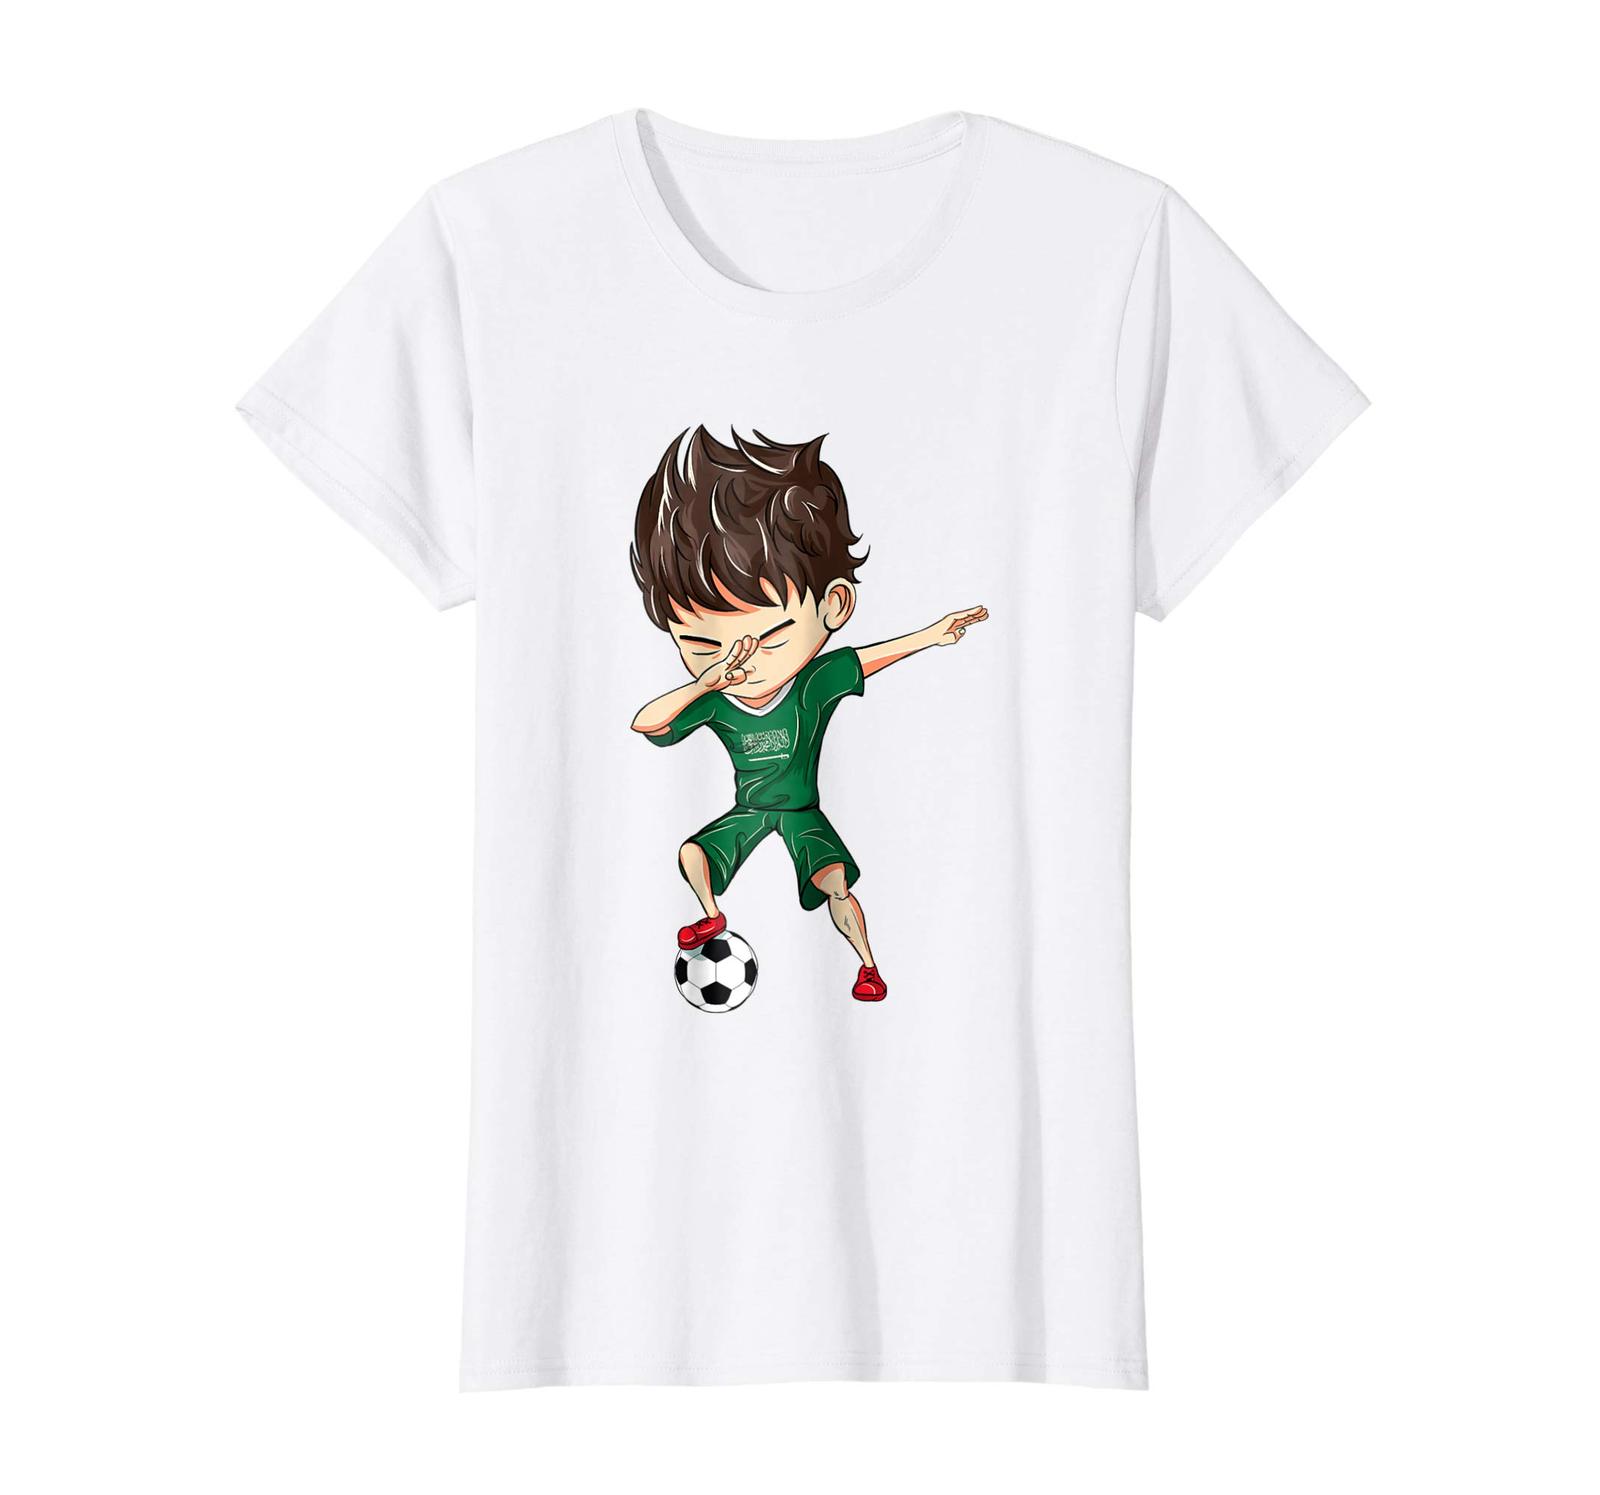 Sport Shirts - Dabbing Soccer Boy Saudi Arabia Jersey Shirt - Football Wowen - $19.95 - $23.95